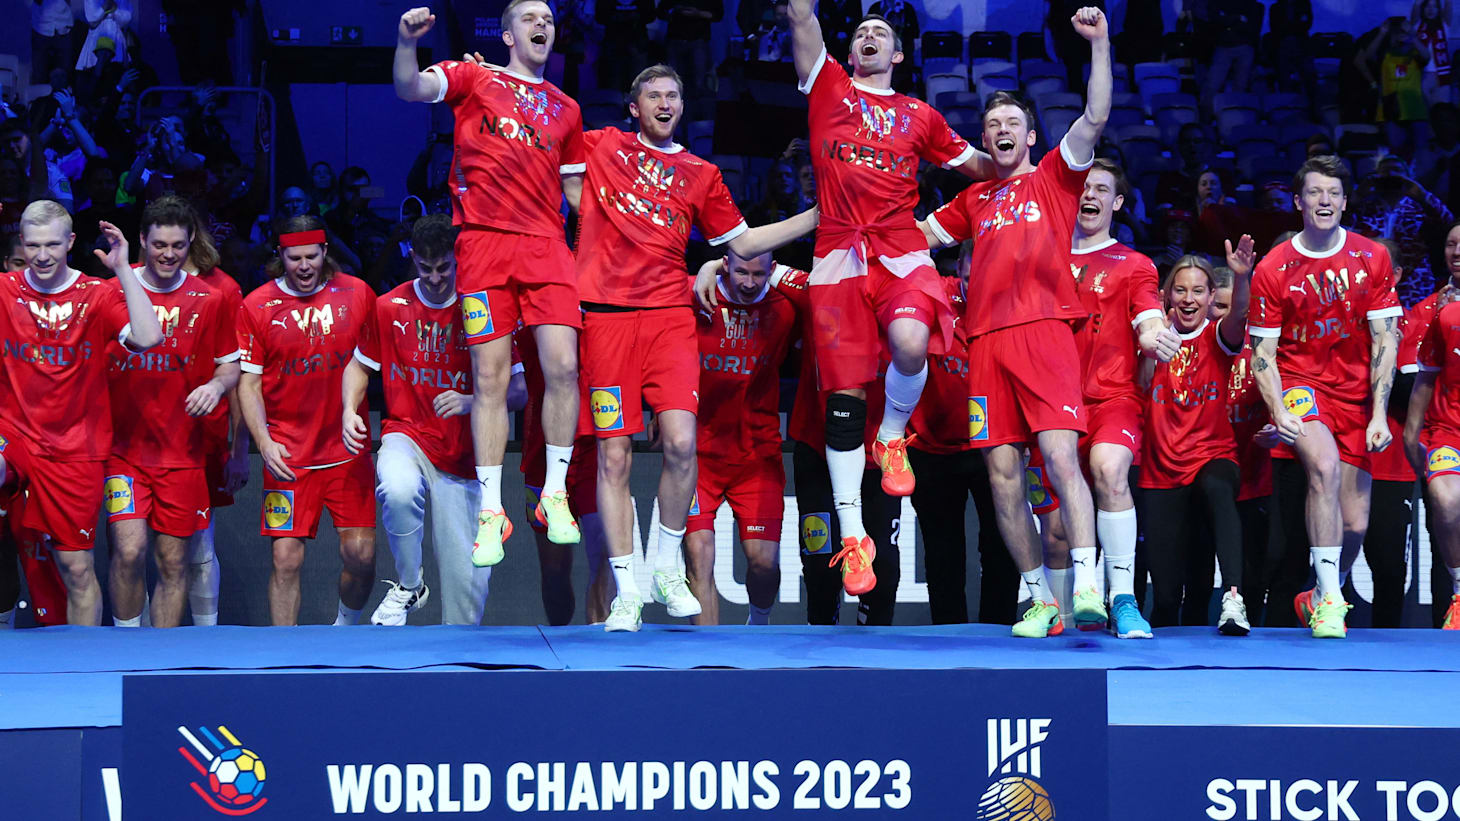 IHF Men's World Handball Championship 2023 Dates, Teams and History